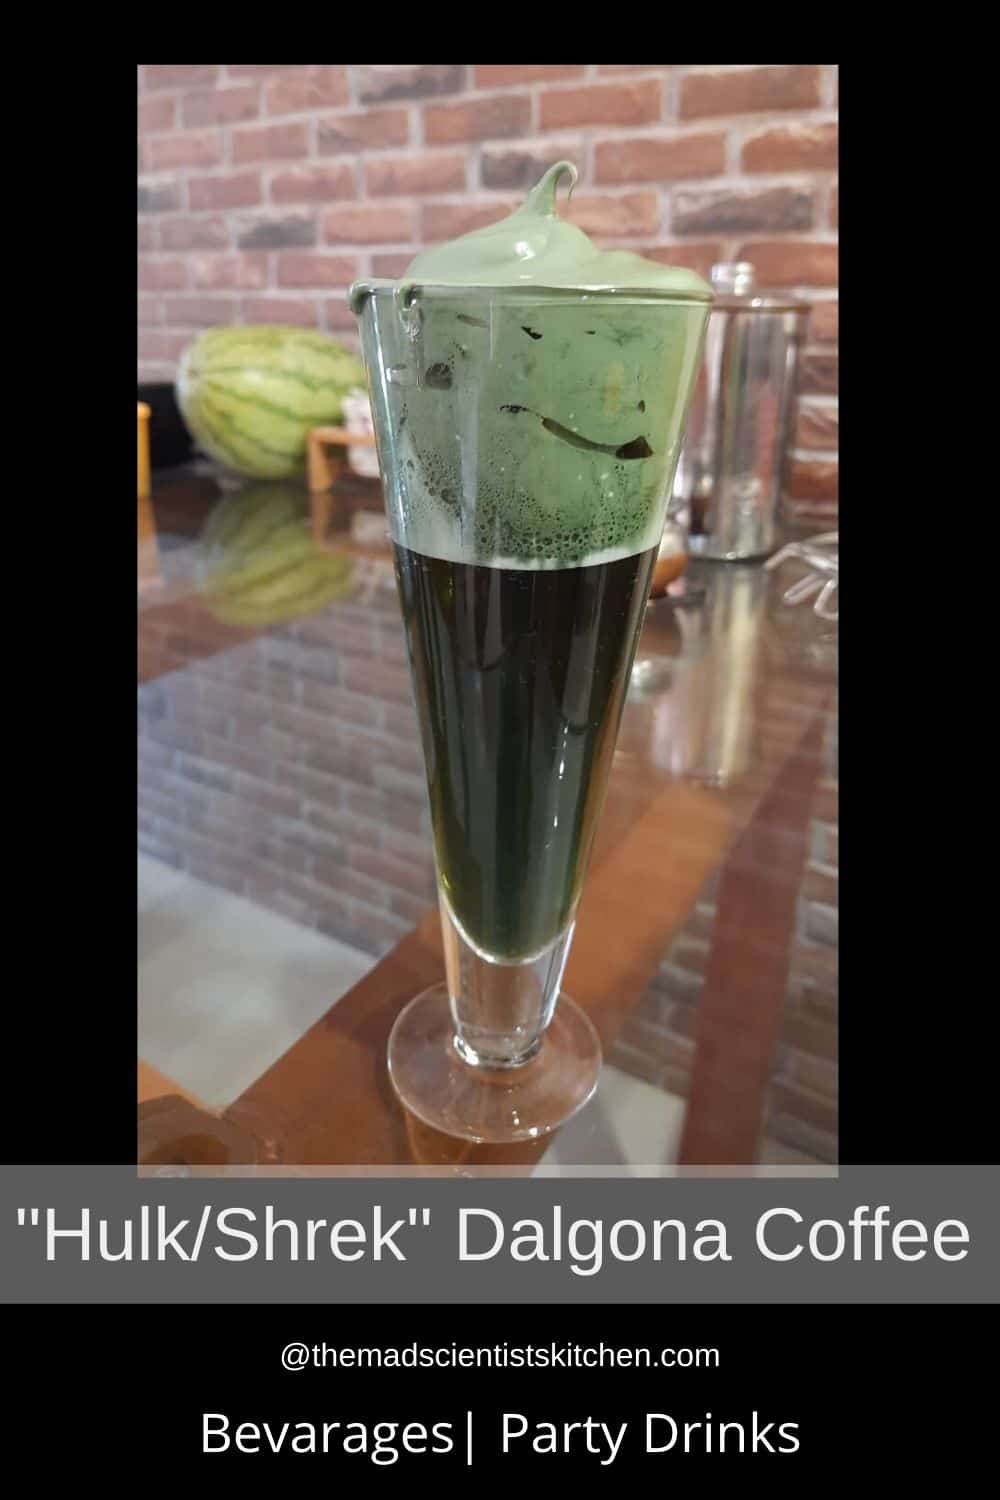 Dalgona Coffee in shades of green